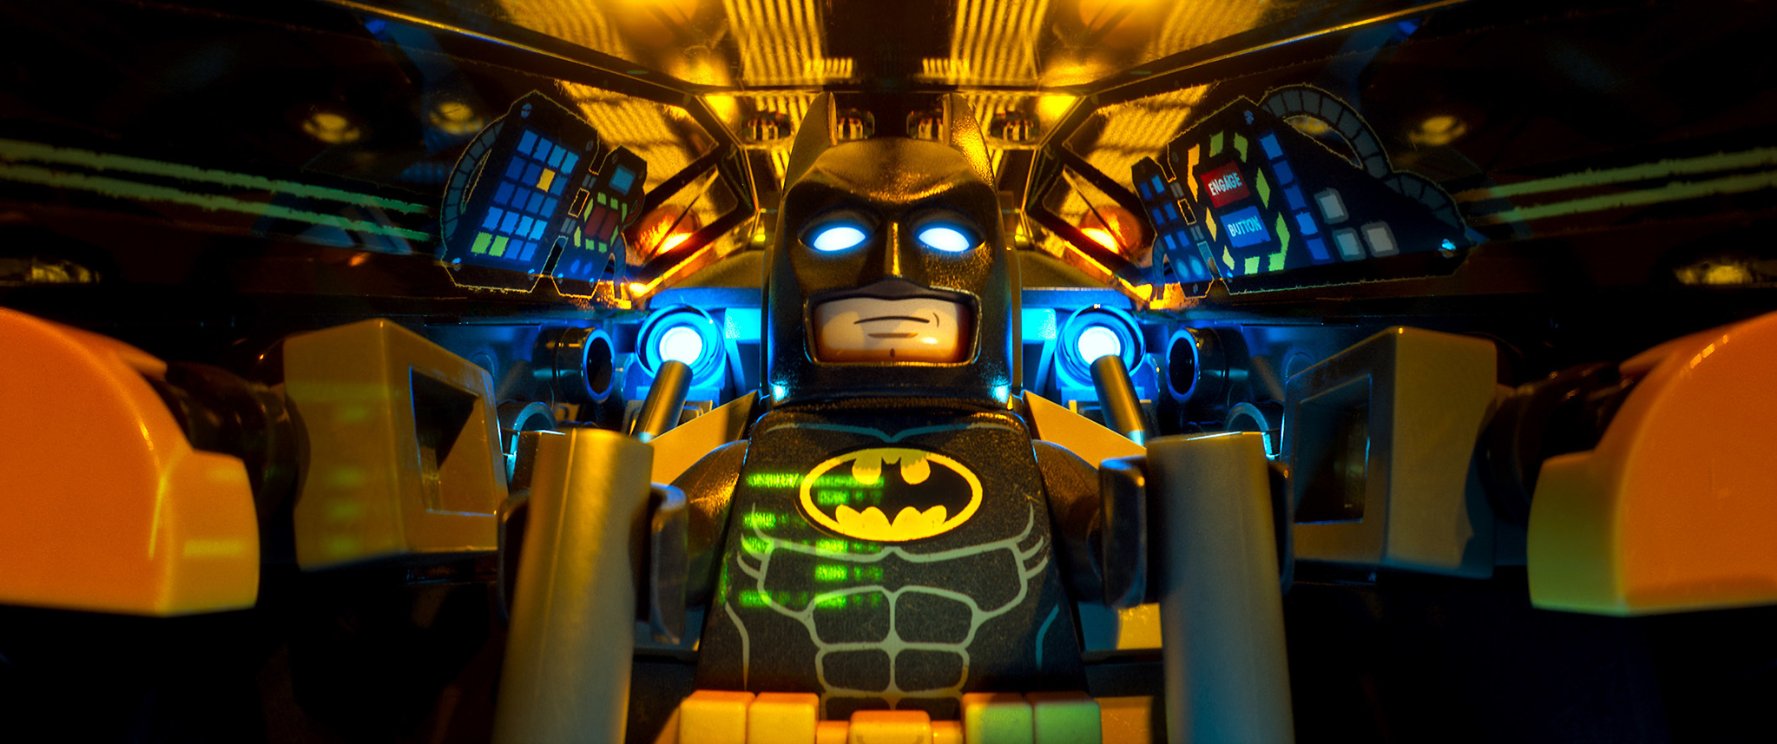 The Lego Batman Movie Review - Culturefly